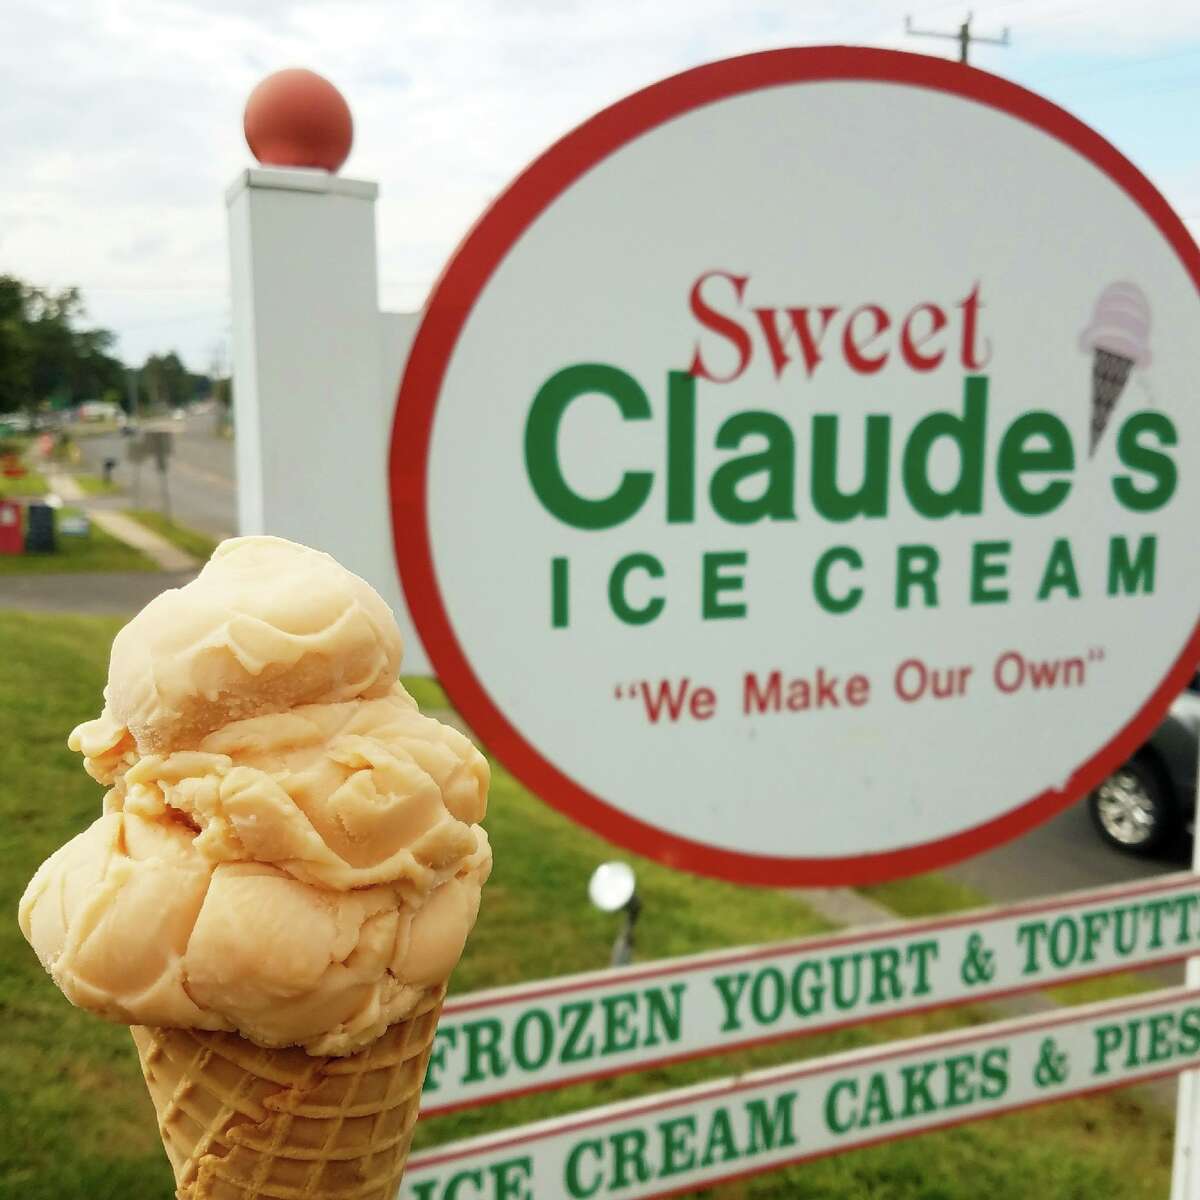 Sweet Claude's Ice Cream in Cheshire